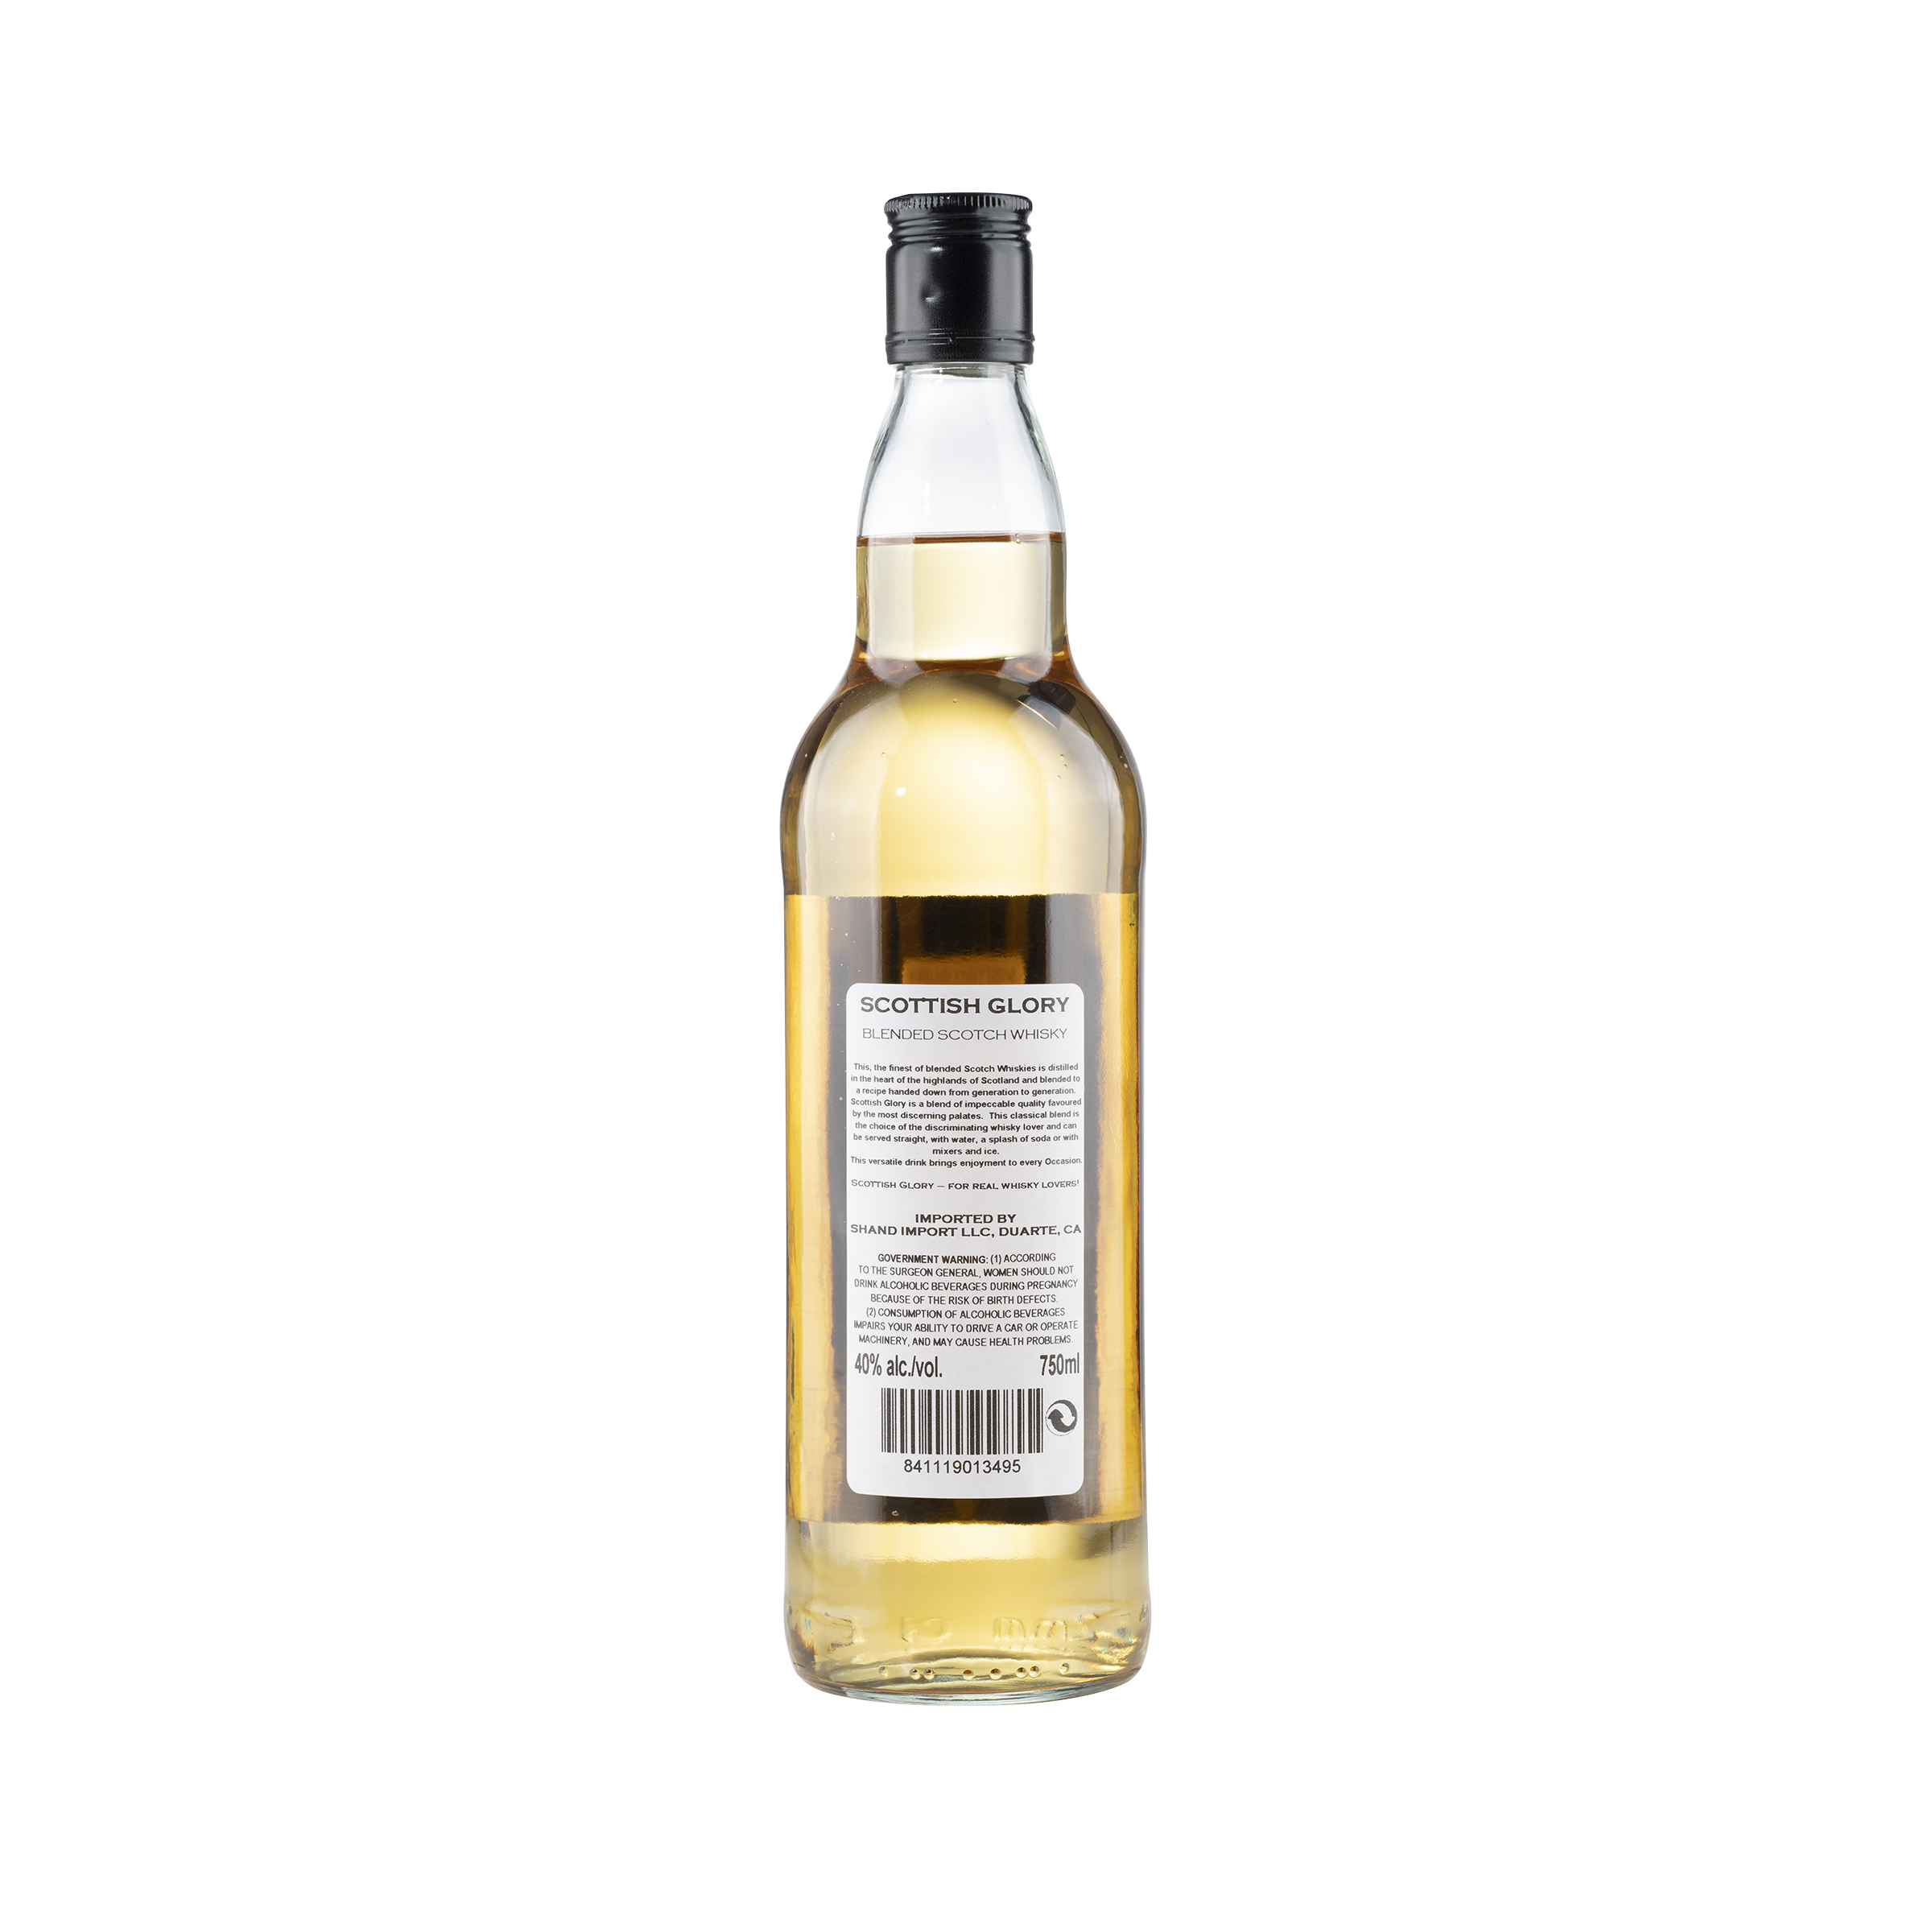 Scottish Glory Blended Scotch Whiskey NV Bottle Back